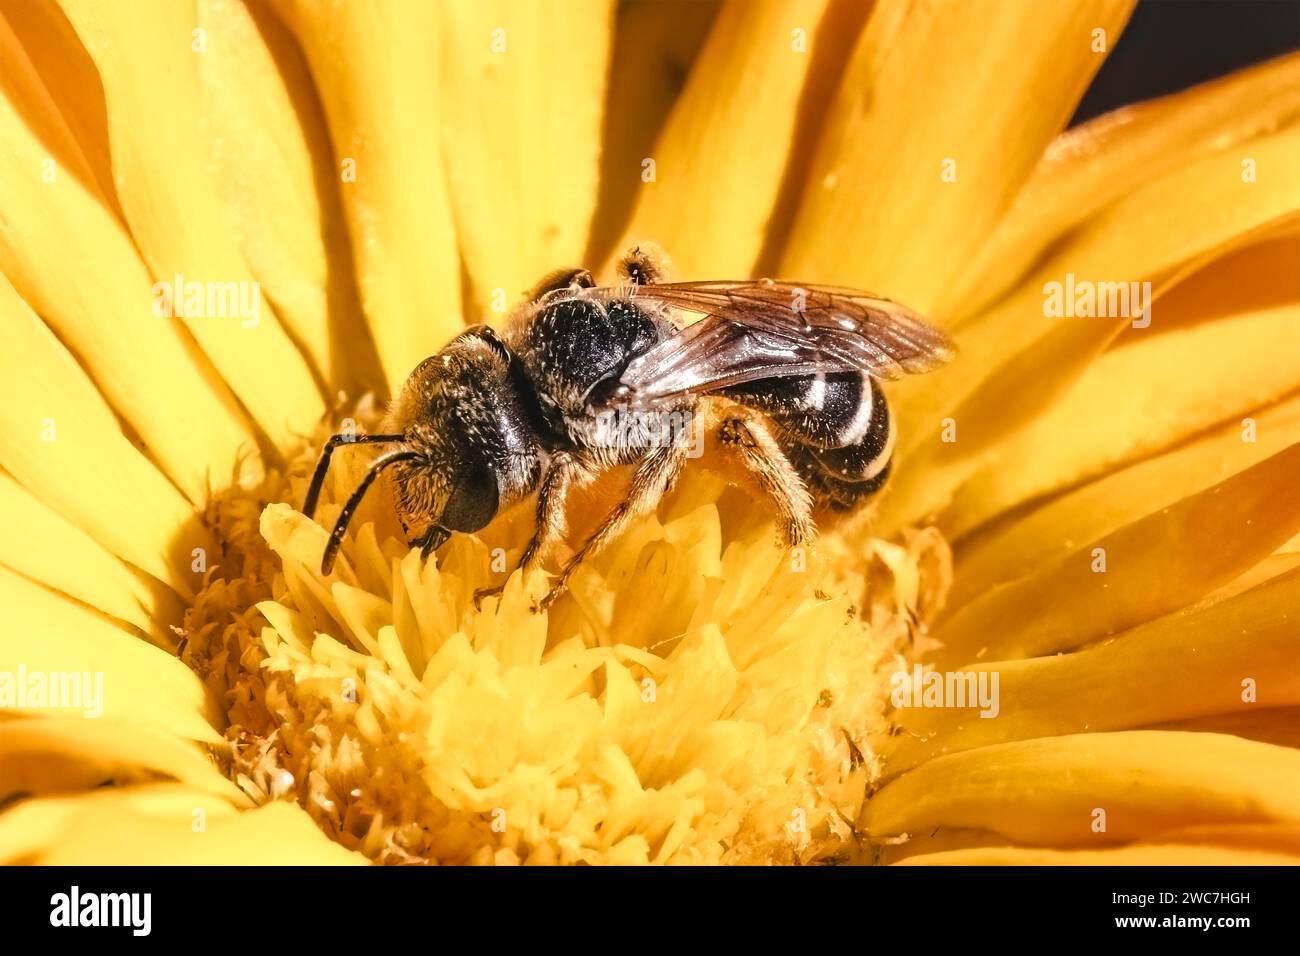 Close up of a native tiny dark metallic Halictus Sweat Bee with striped abdomen pollinating and feeding on a yellow calendula flower. Long Island, NY Stock Photo